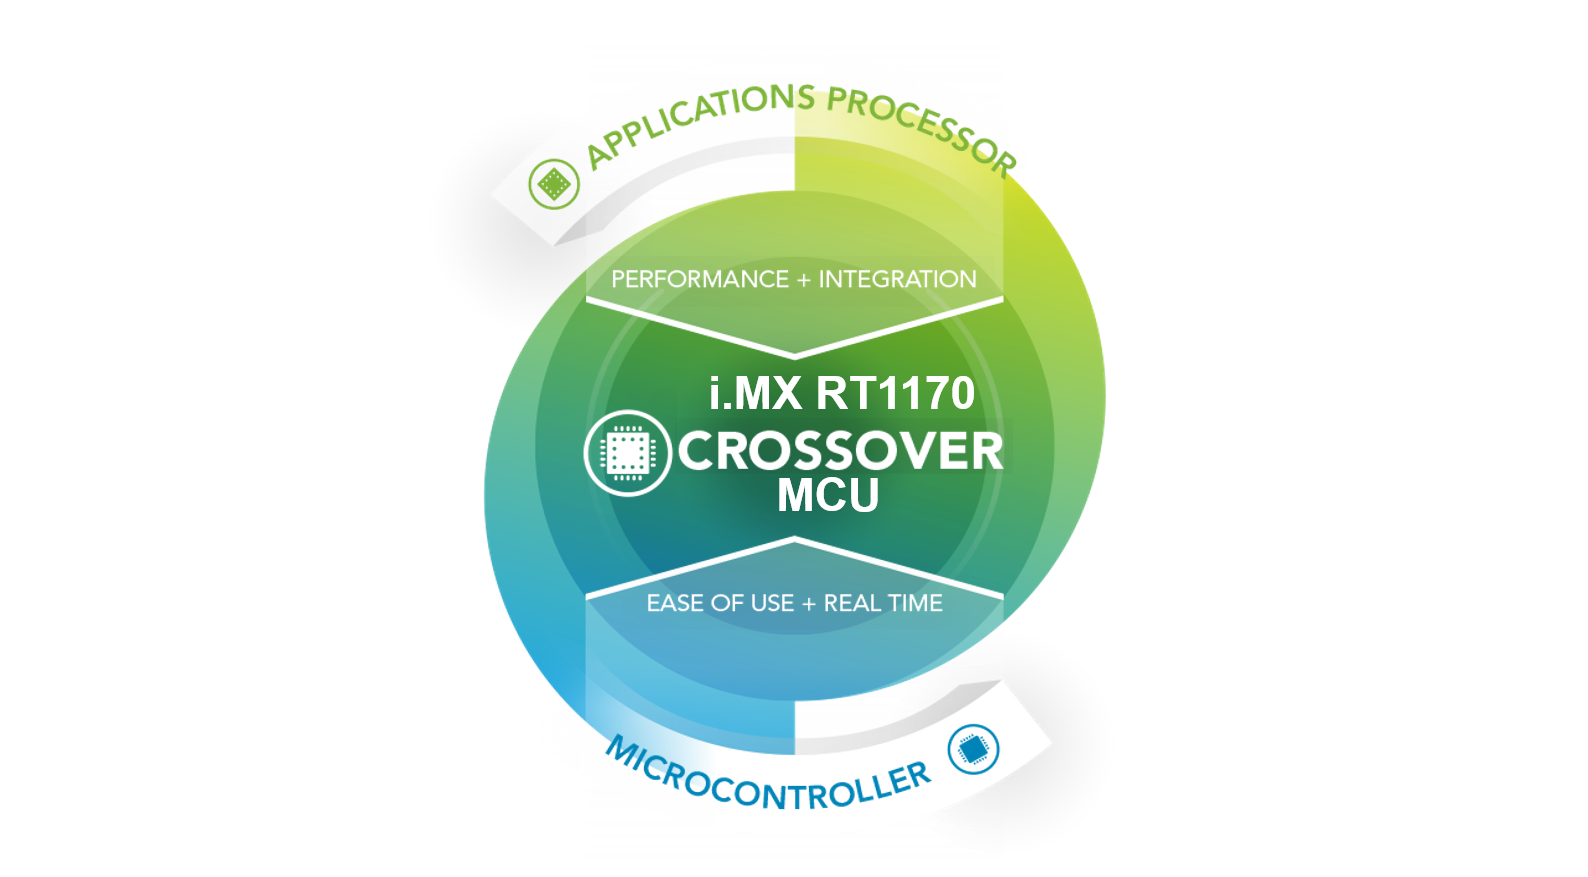 NXP i.MX RT1170 Crossover MCU